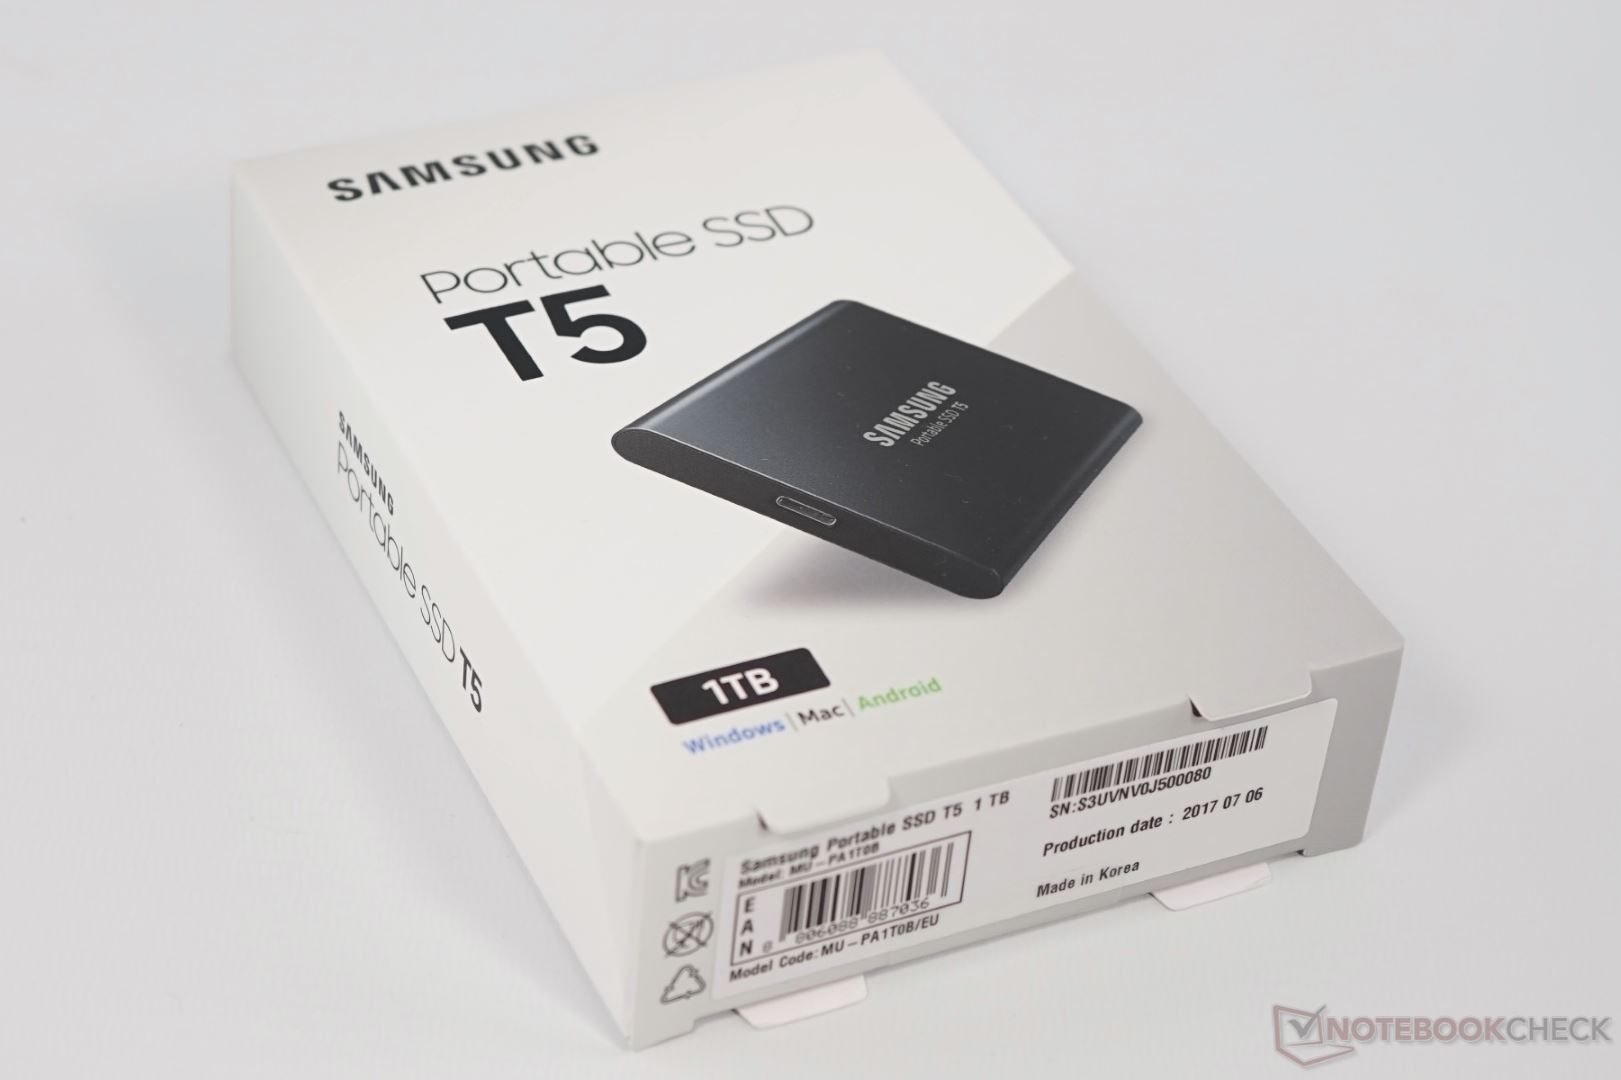 Samsung Ssd T5 Storage Bag, External Ssd Case 1tb, Samsung T5 Case